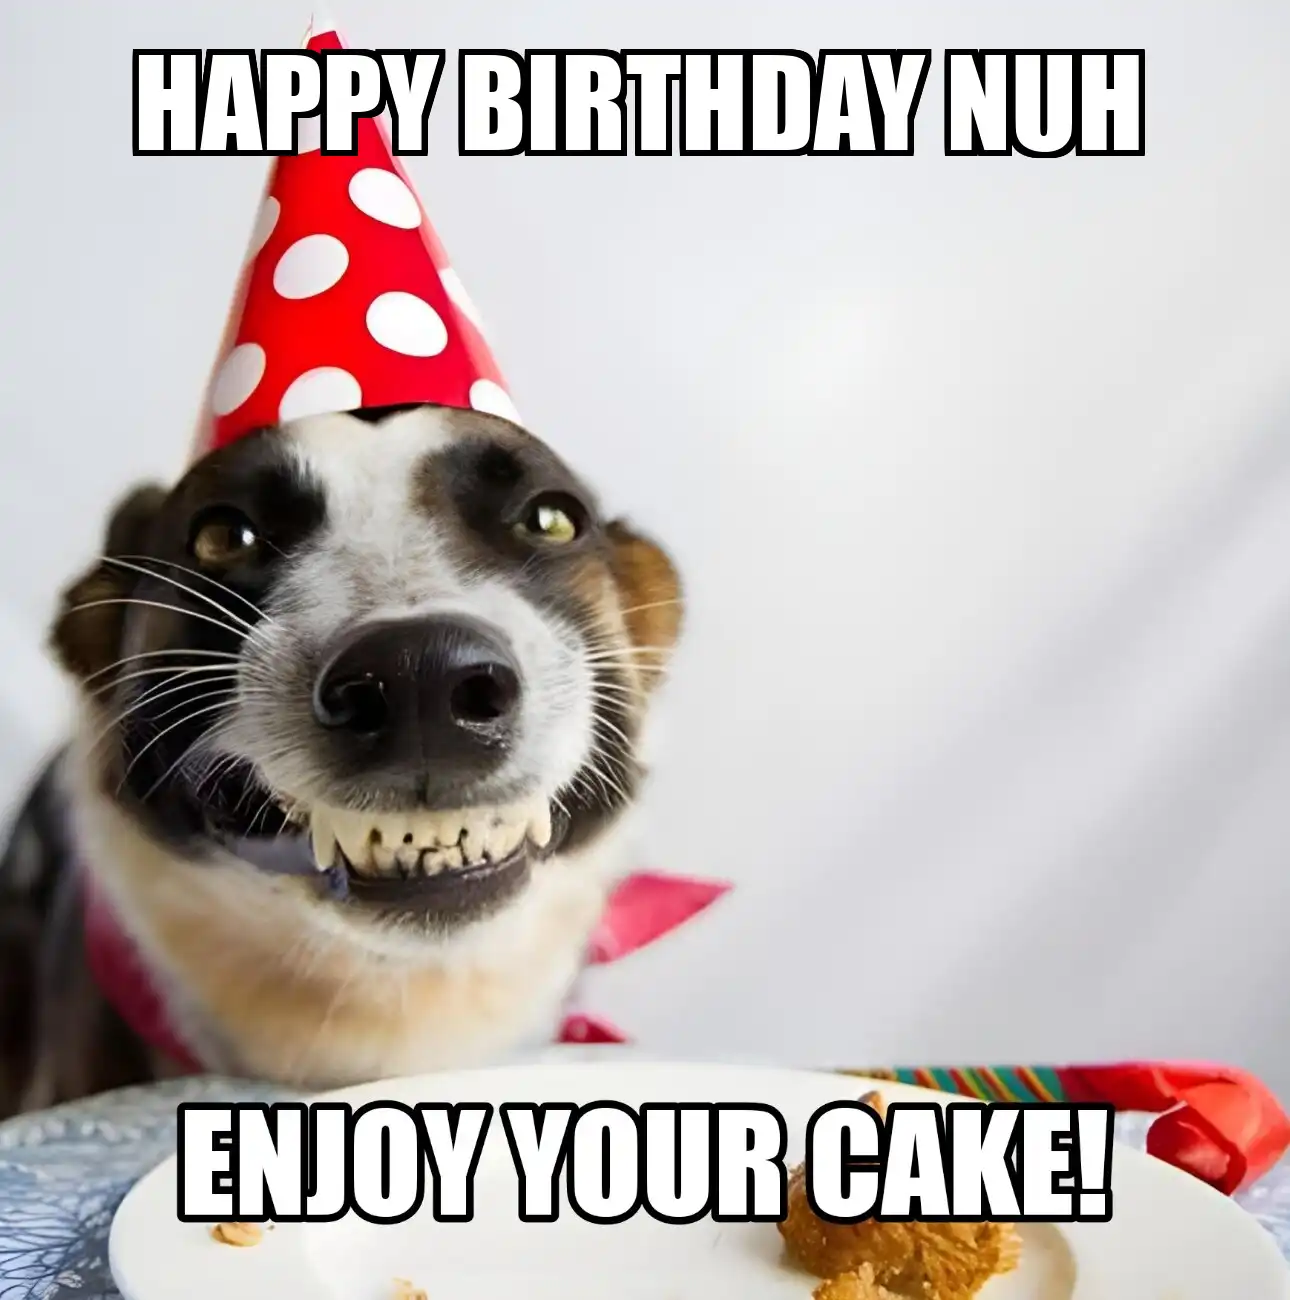 Happy Birthday Nuh Enjoy Your Cake Dog Meme